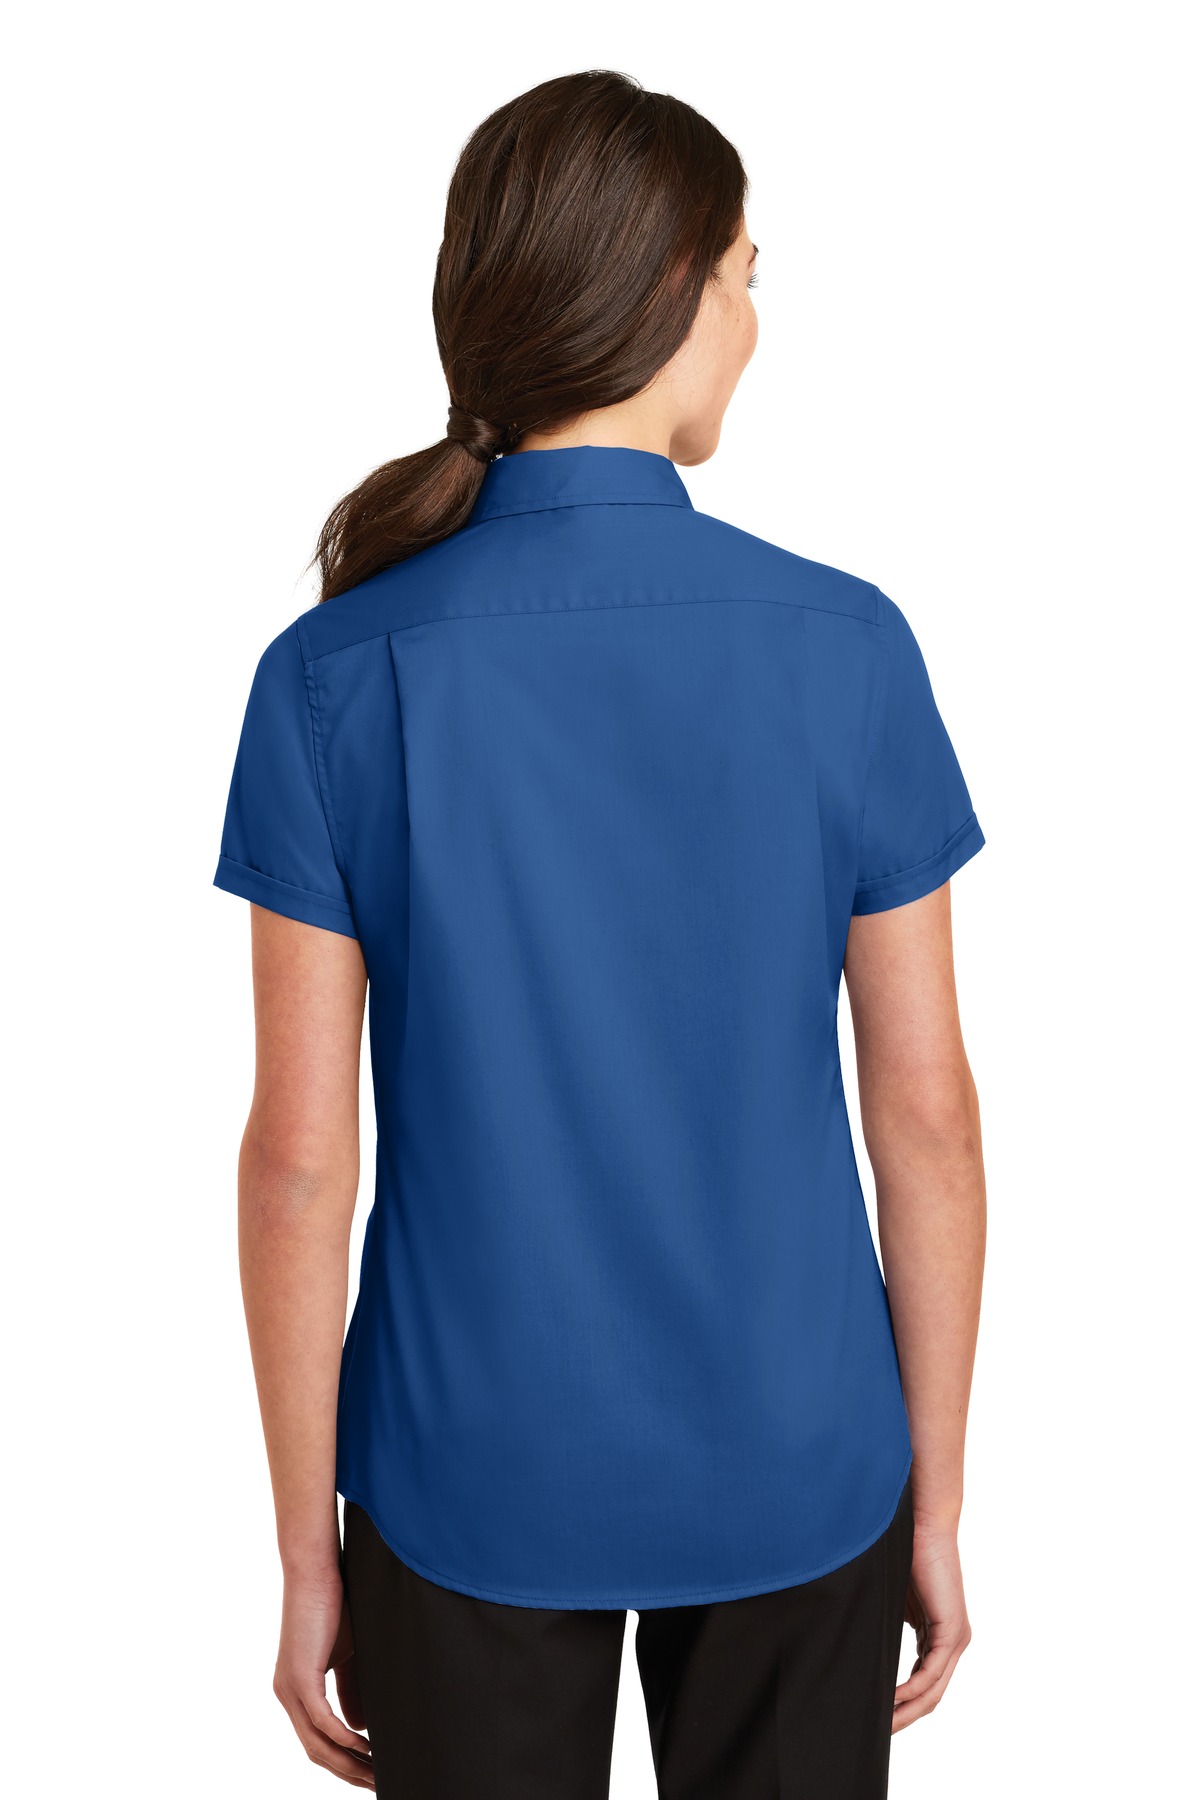 Port Authority Ladies Short Sleeve SuperPro Twill Shirt-M (True Blue) - image 2 of 6